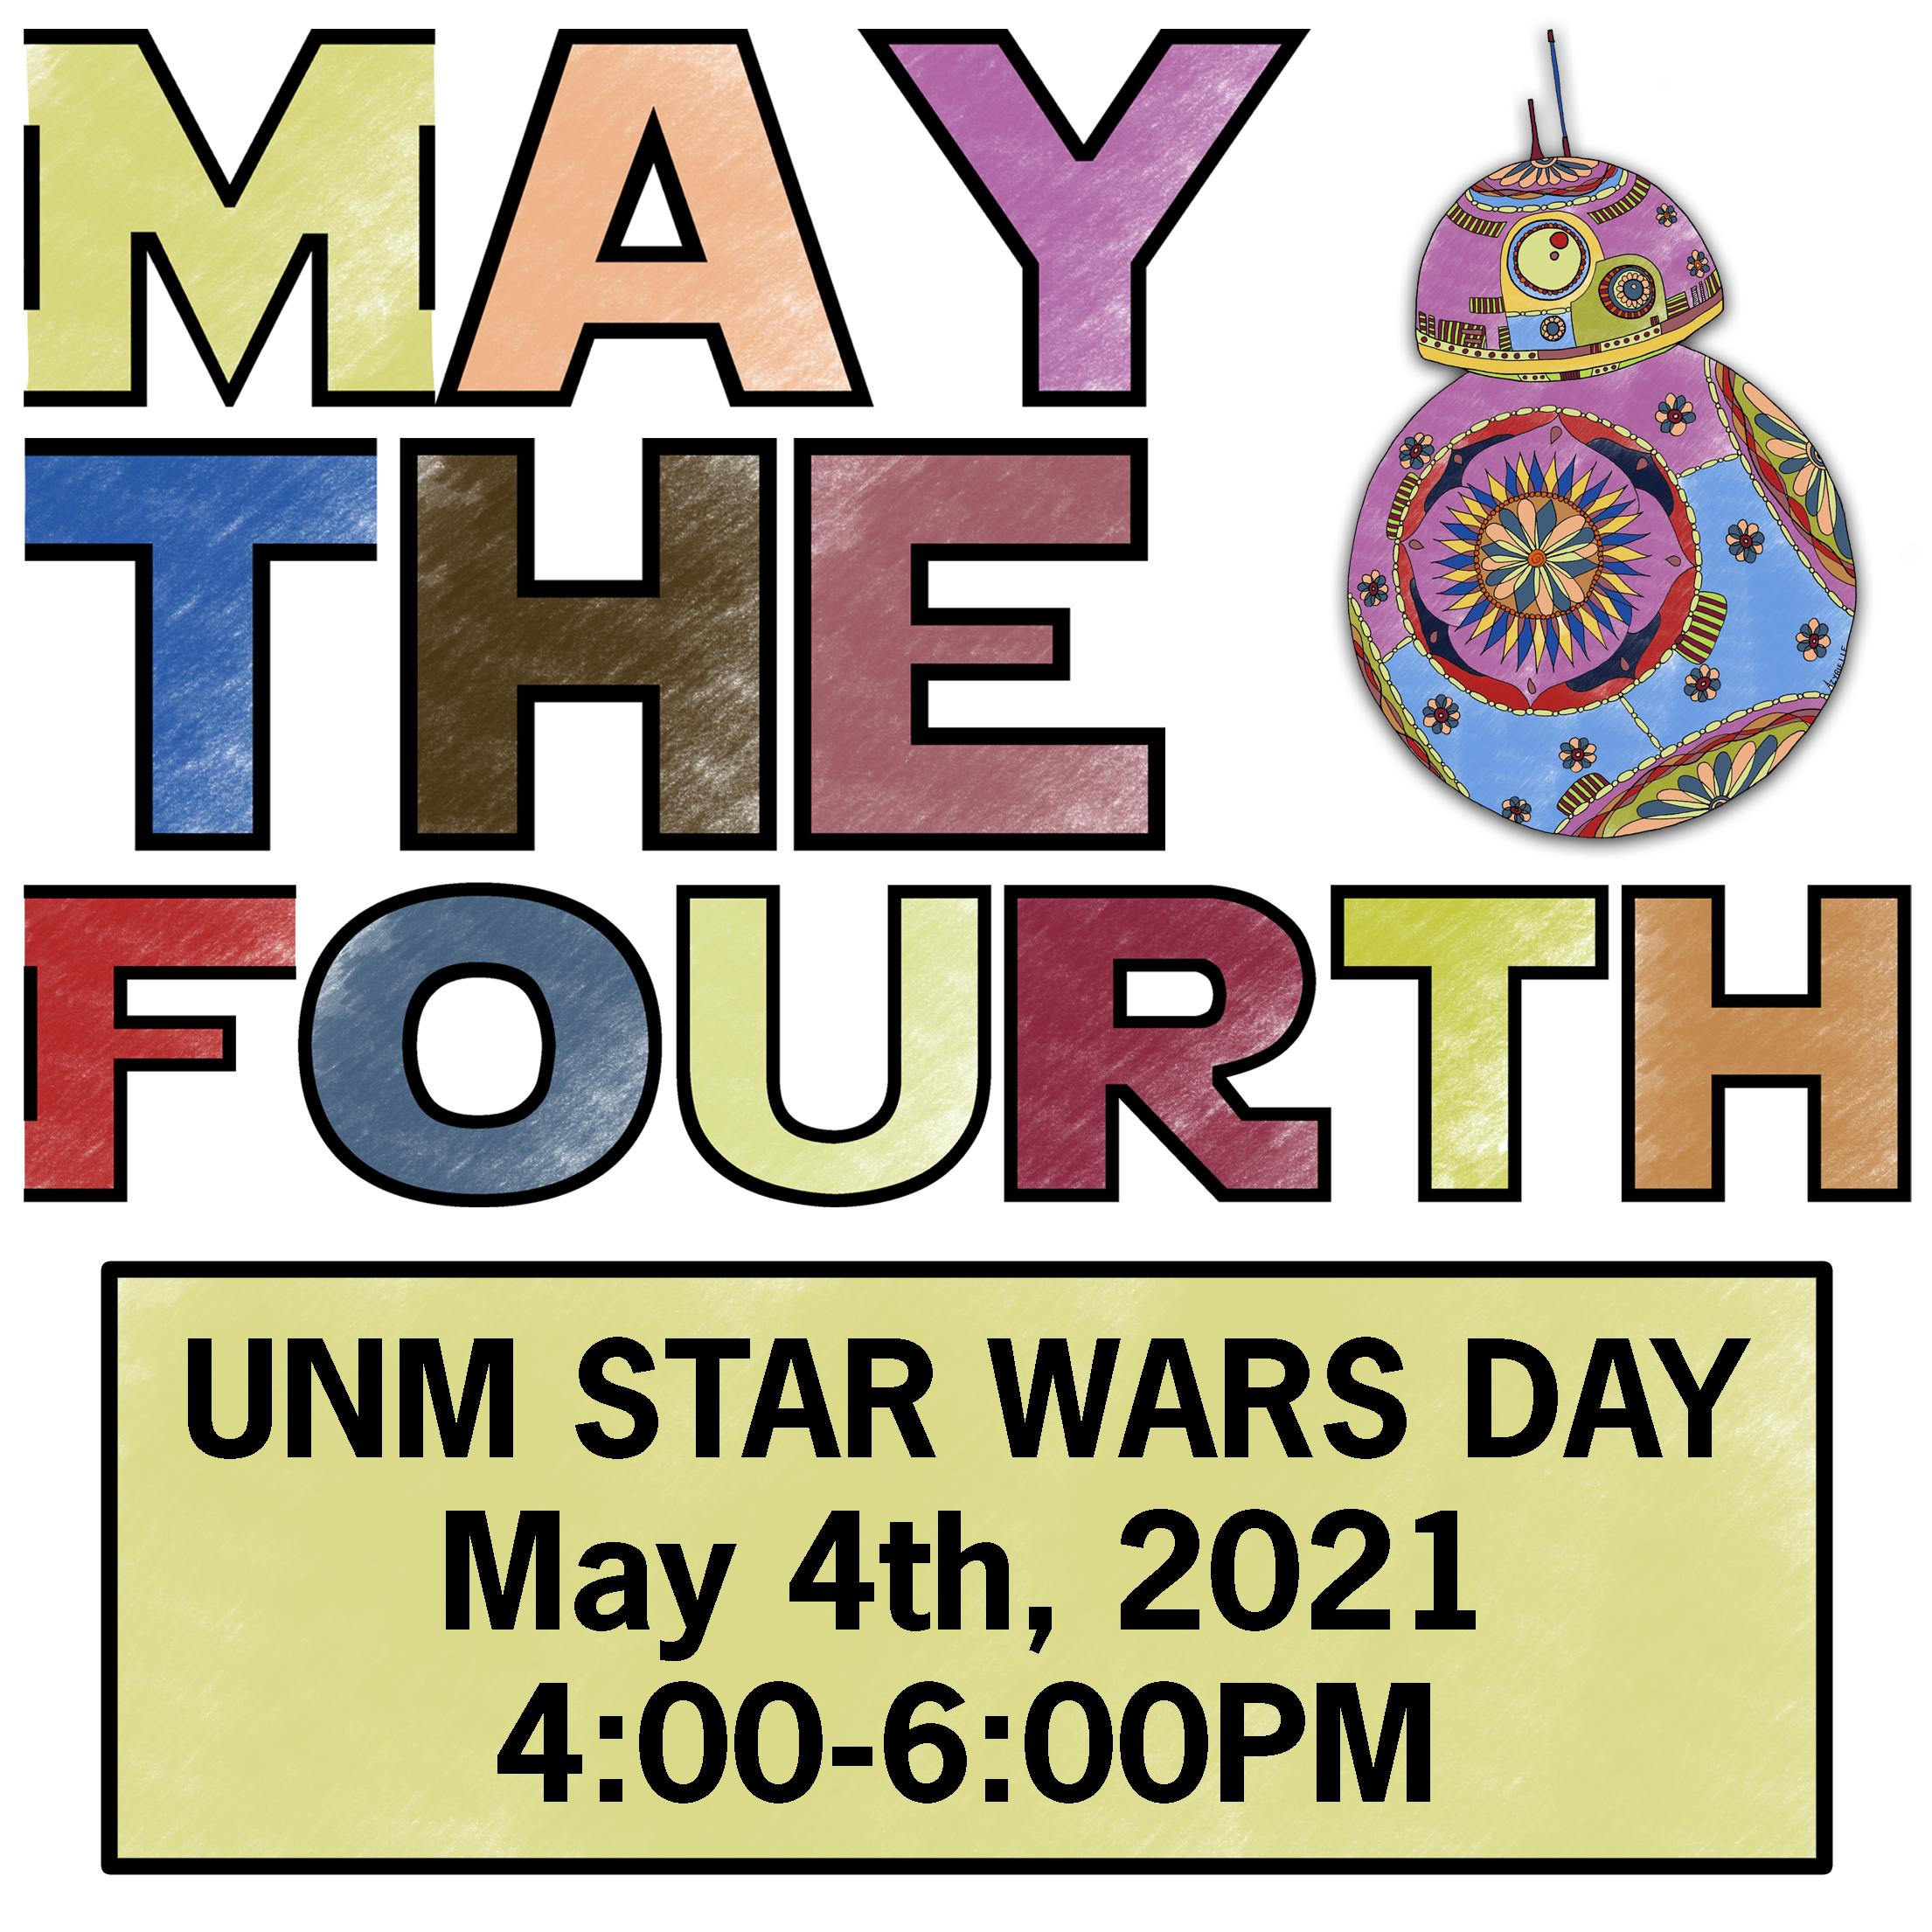 Student Activities - Star Wars Day